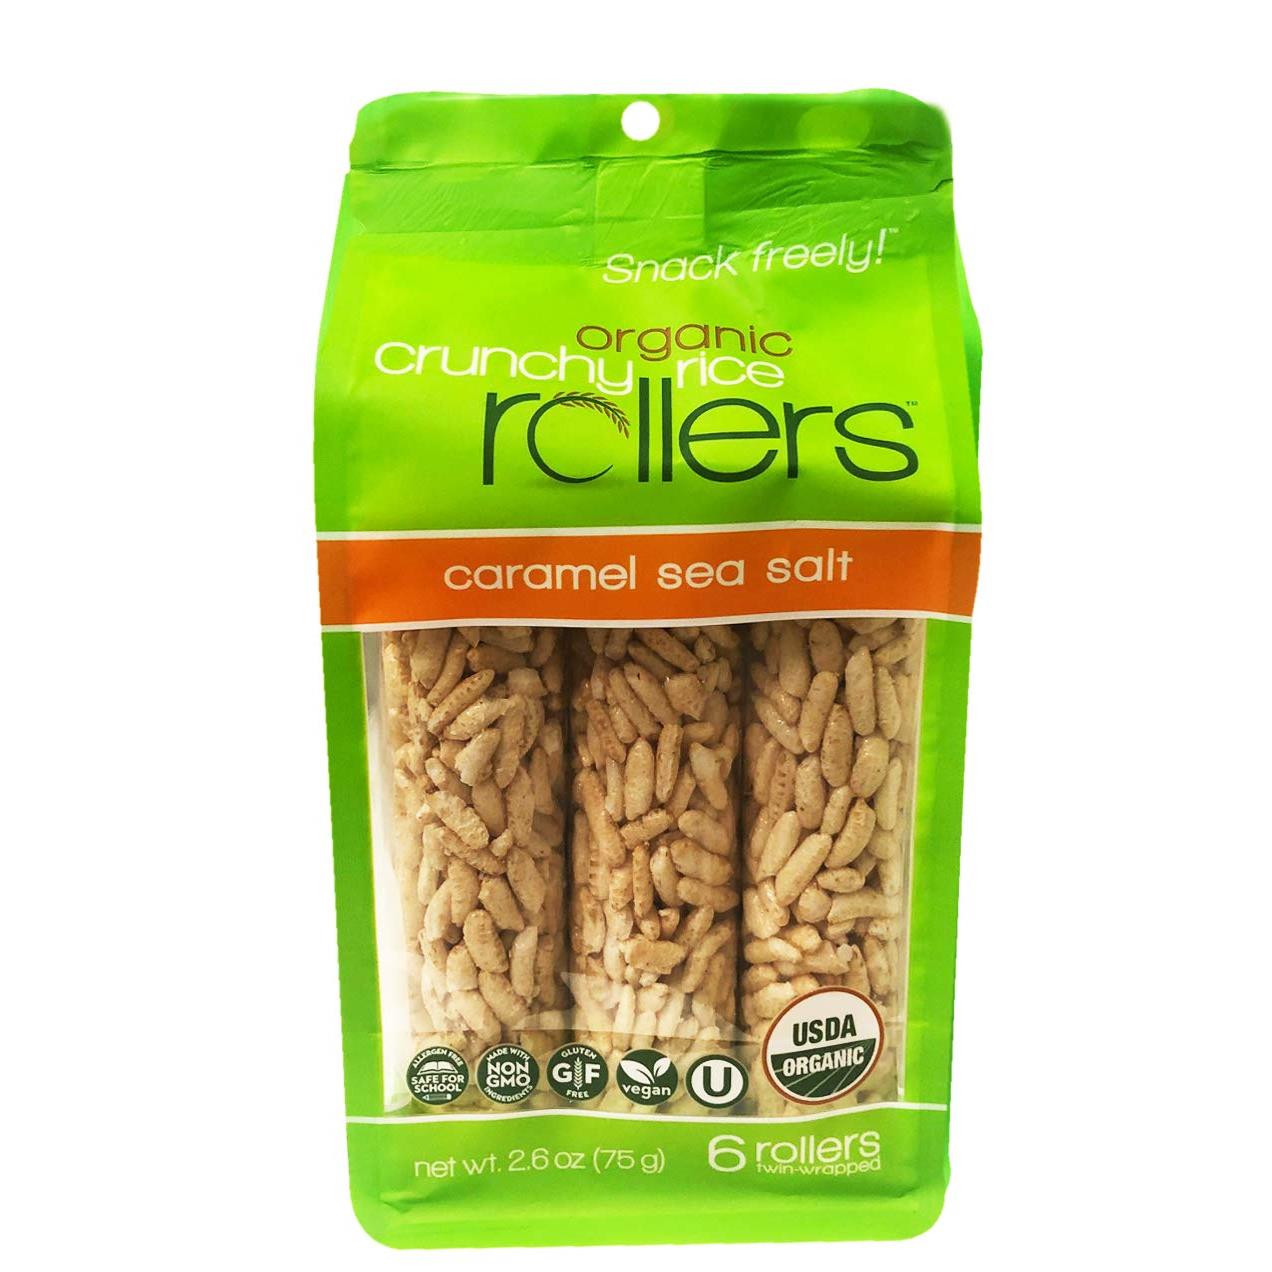 Bamboo USDA Organic Crunchy Brown Rice Rollers New Flavor 1 Pack, 6 Rolls (Caramel Sea Salt)